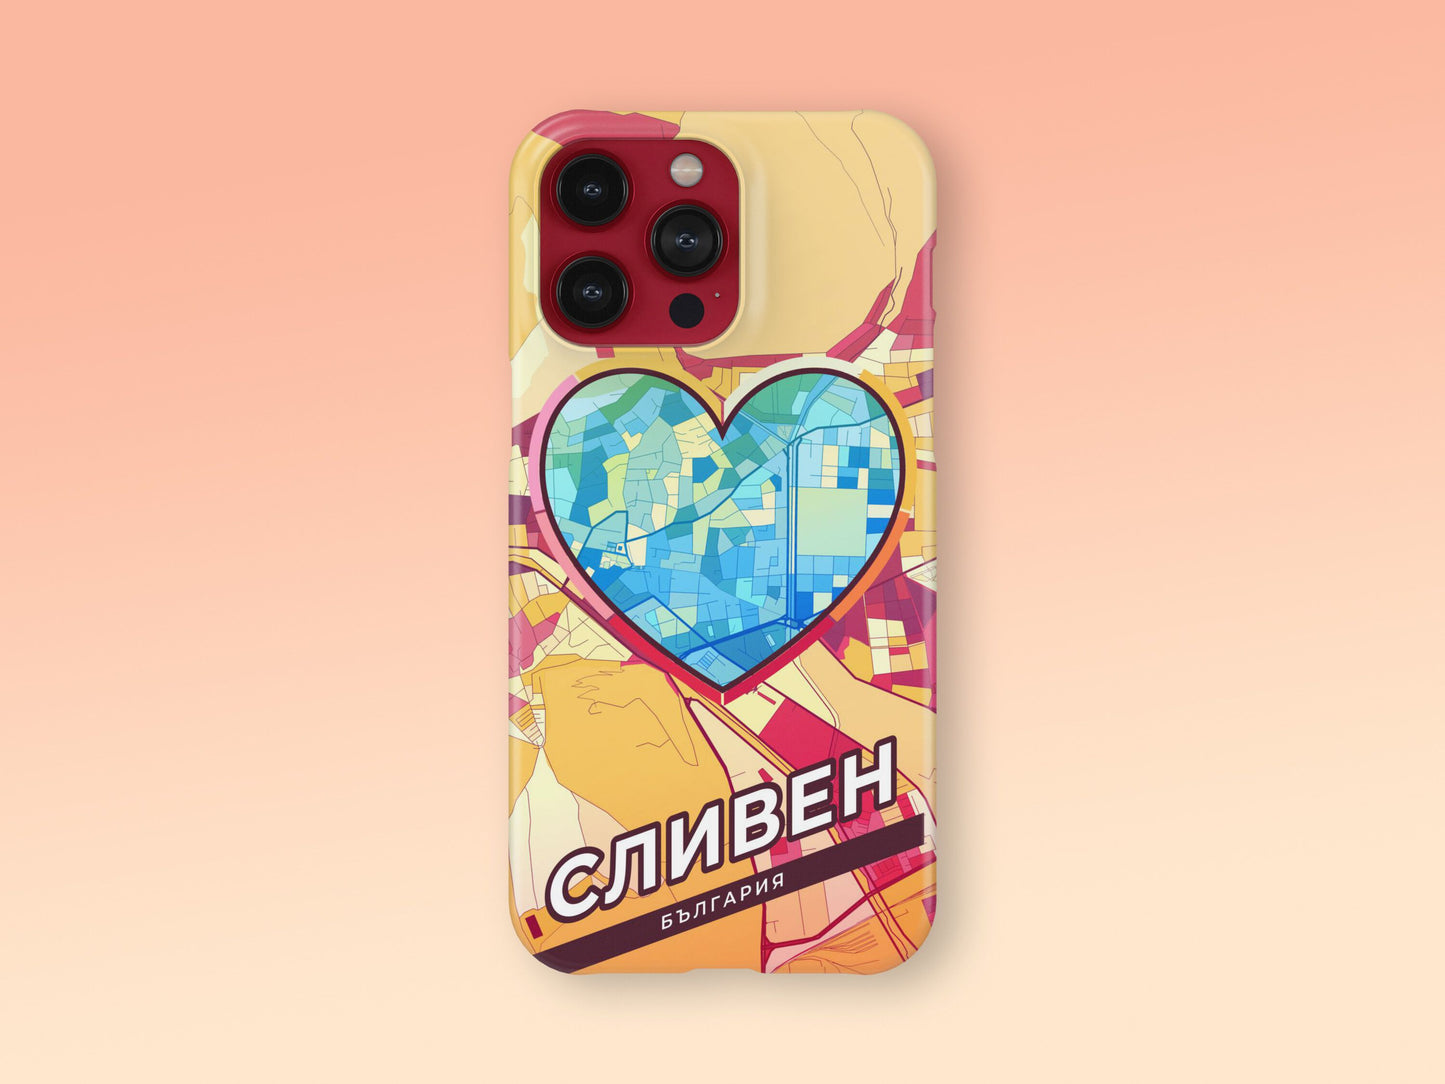 Сливен България slim phone case with colorful icon. Birthday, wedding or housewarming gift. Couple match cases. 2